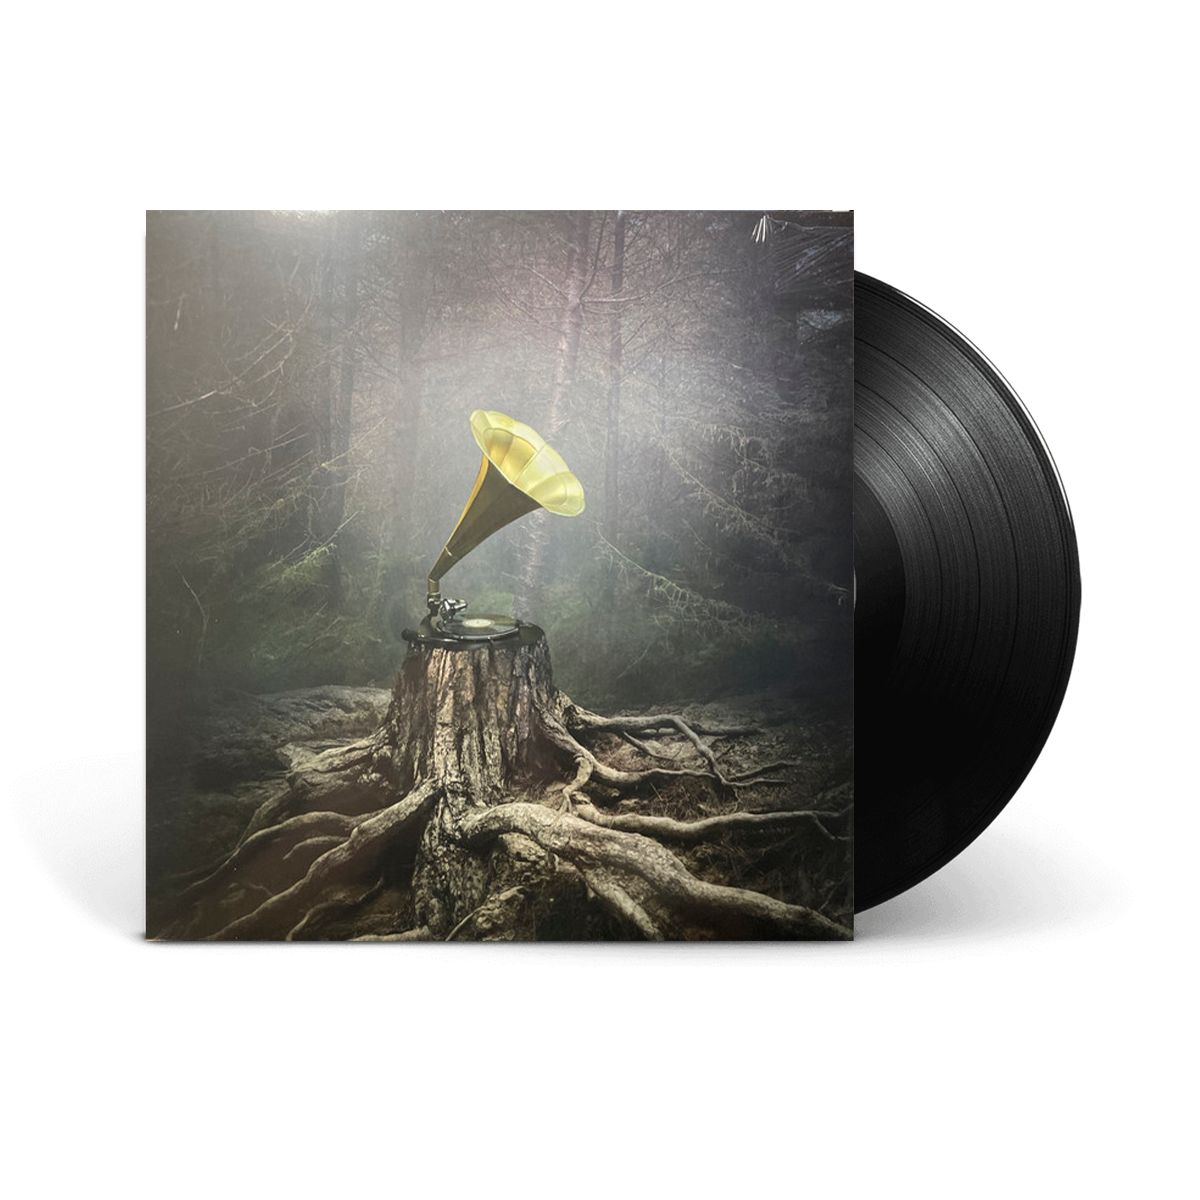 Виниловая пластинка LP: Аквариум – "Тор" [Black Vinyl]